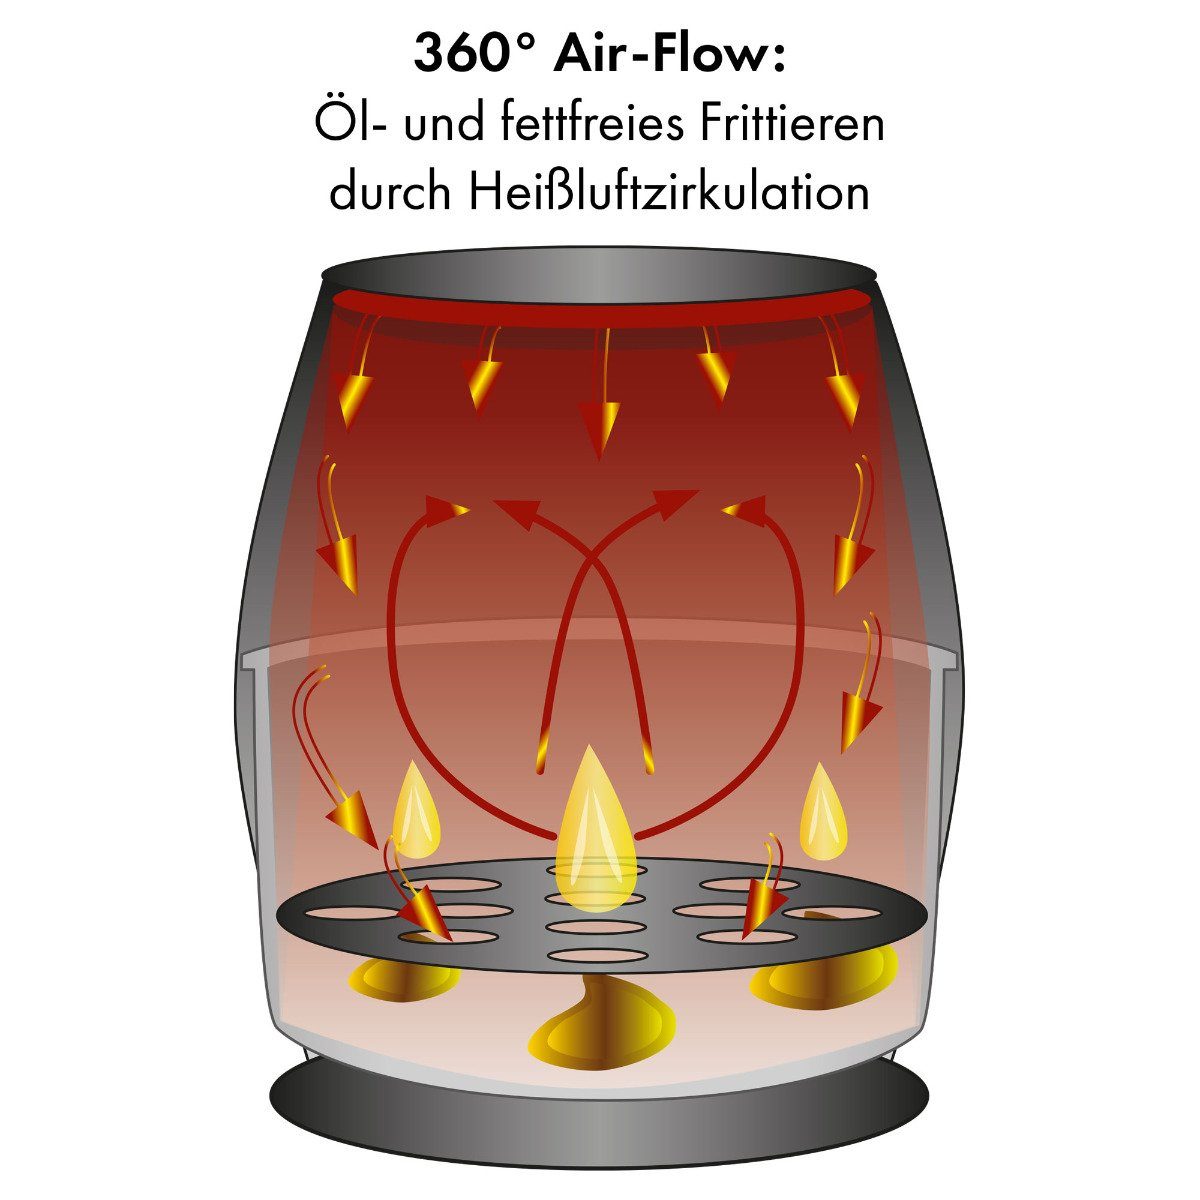 XXL Air-Flow, 1450W H, FR Heißluftfritteuse 360° 5L, CLATRONIC Programme, 8 3782